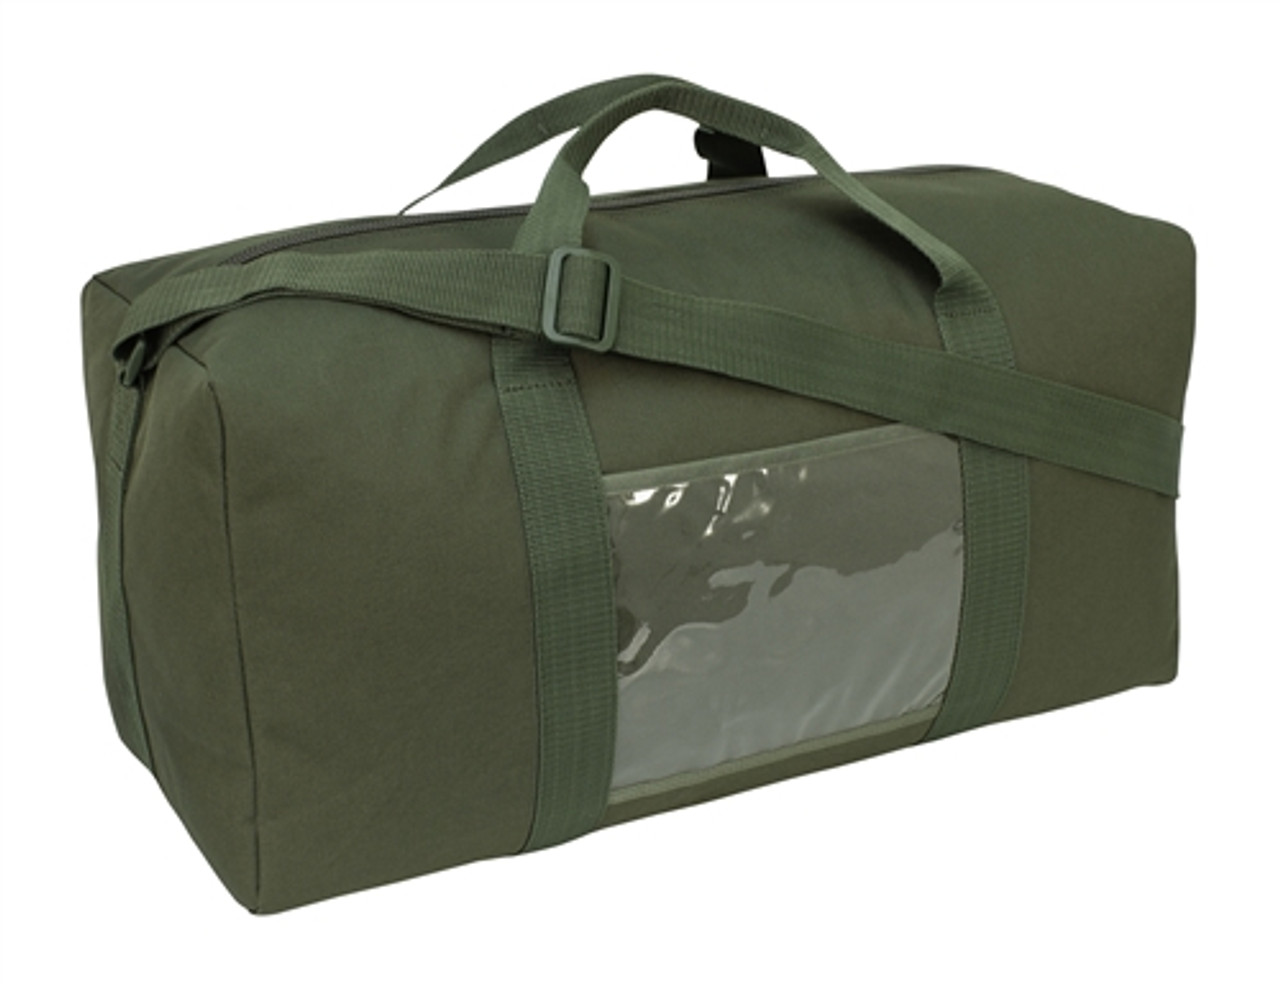 Olive Drab Small Duffle Bag | Military Luggage